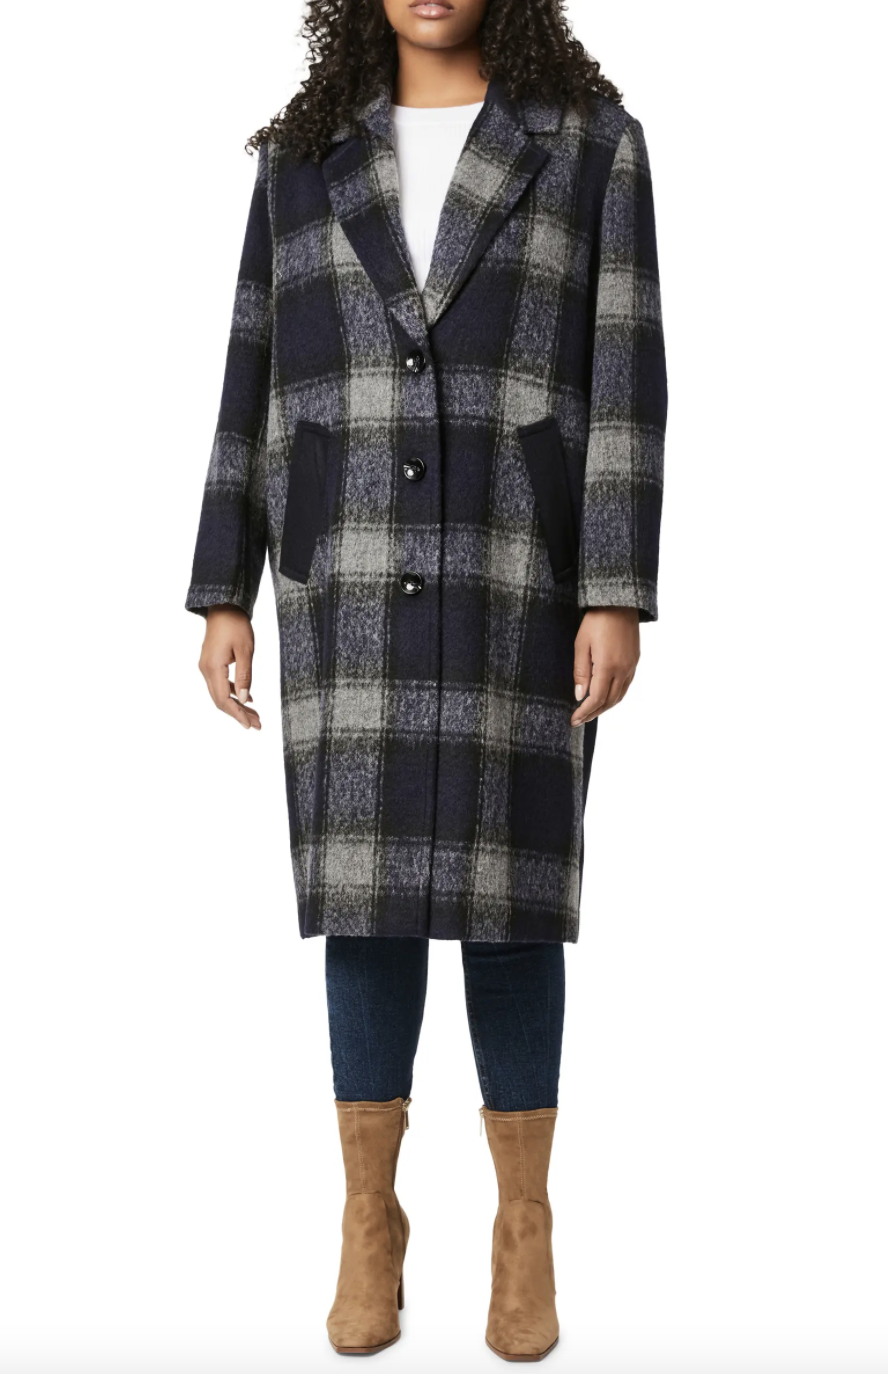 Bernardo Plaid Wool Coat plus size coat in navy and black check print